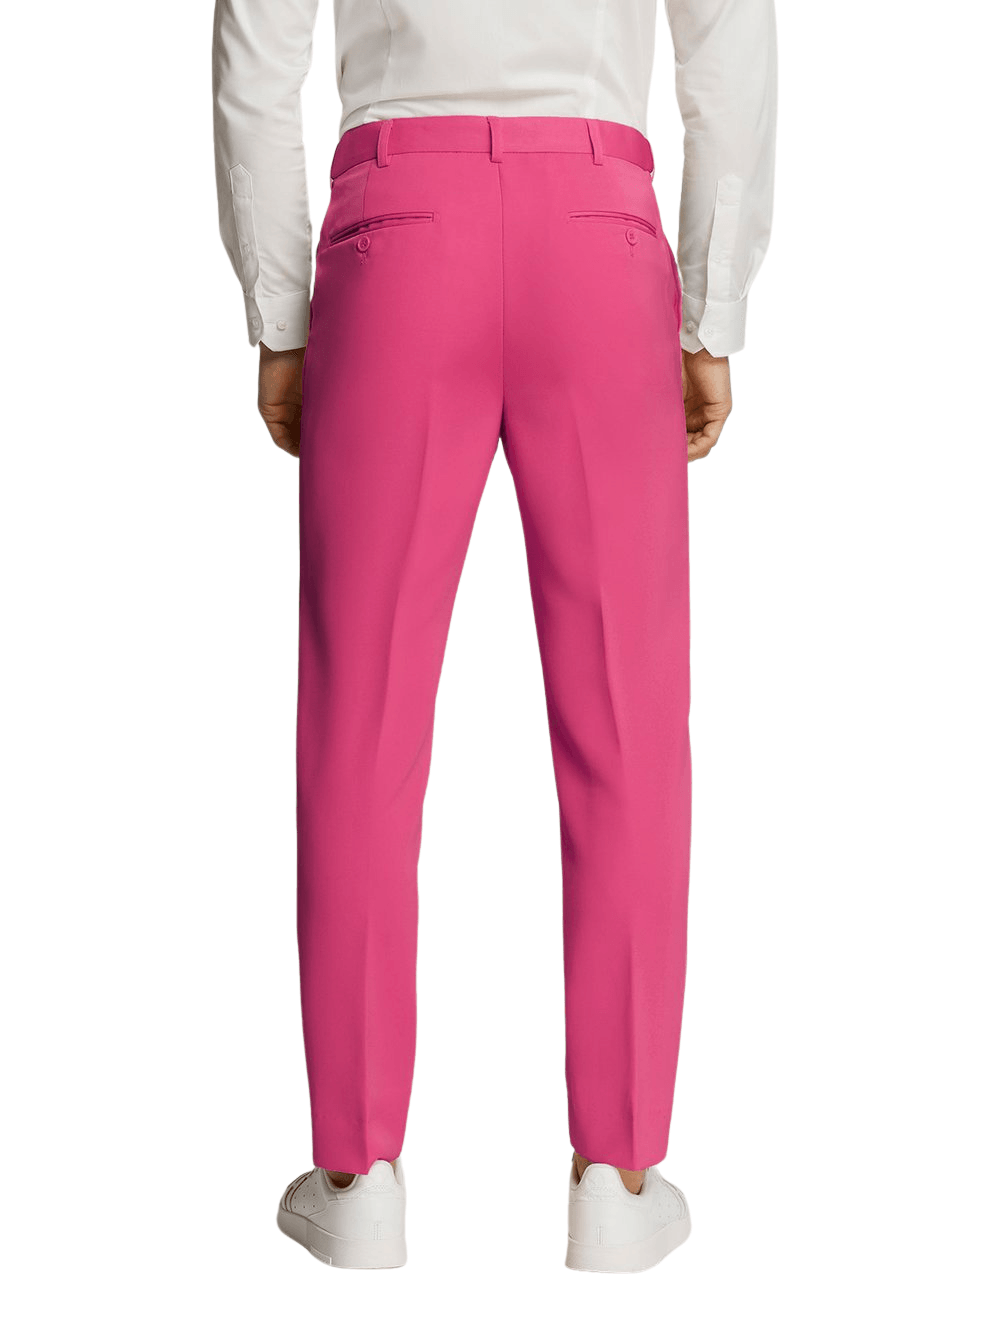 Hot Pink Microfiber Pants